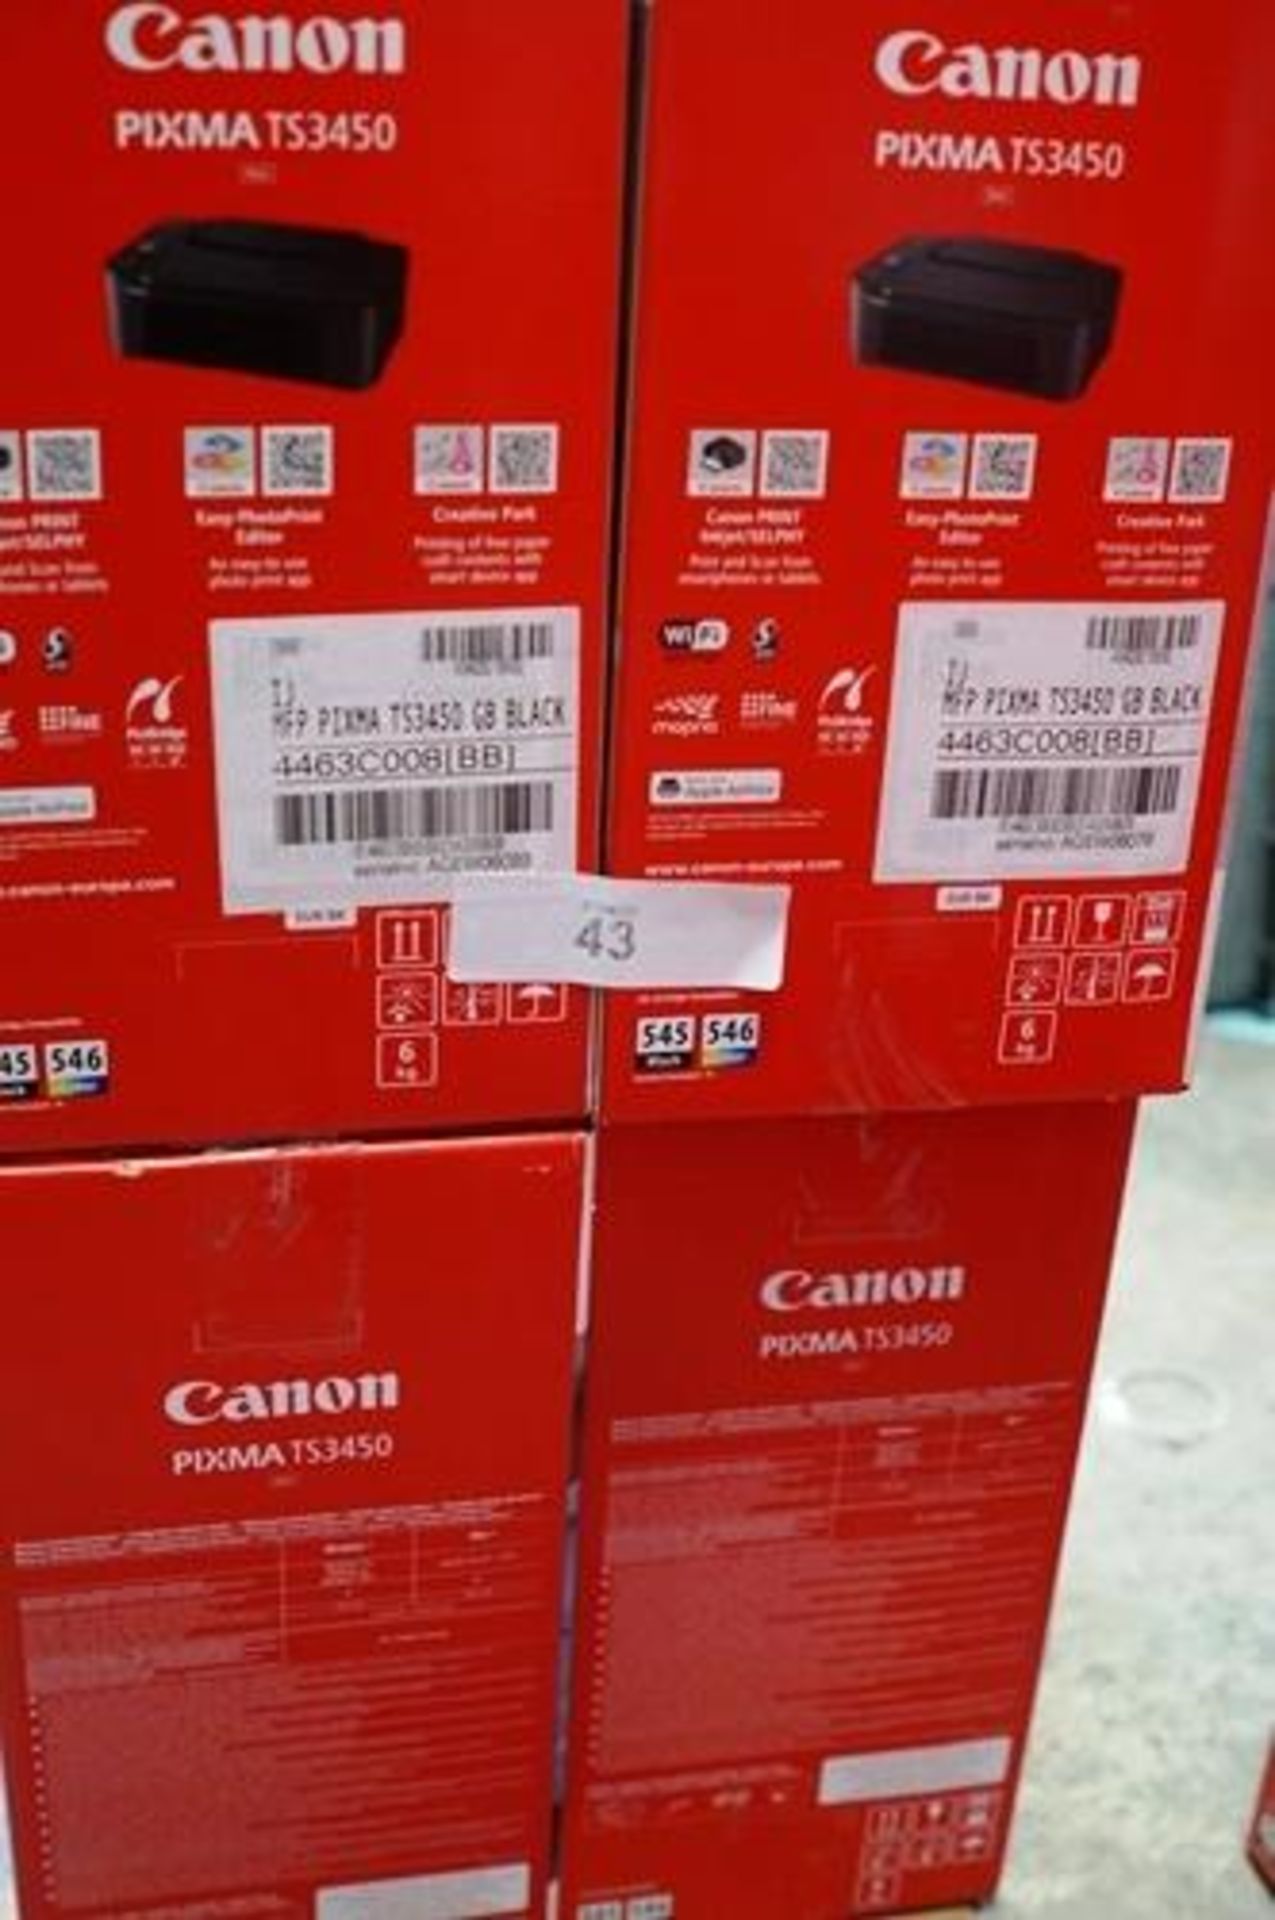 4 x Canon Pixma TS3450 printers - Sealed new in box (ES8) - Image 2 of 2